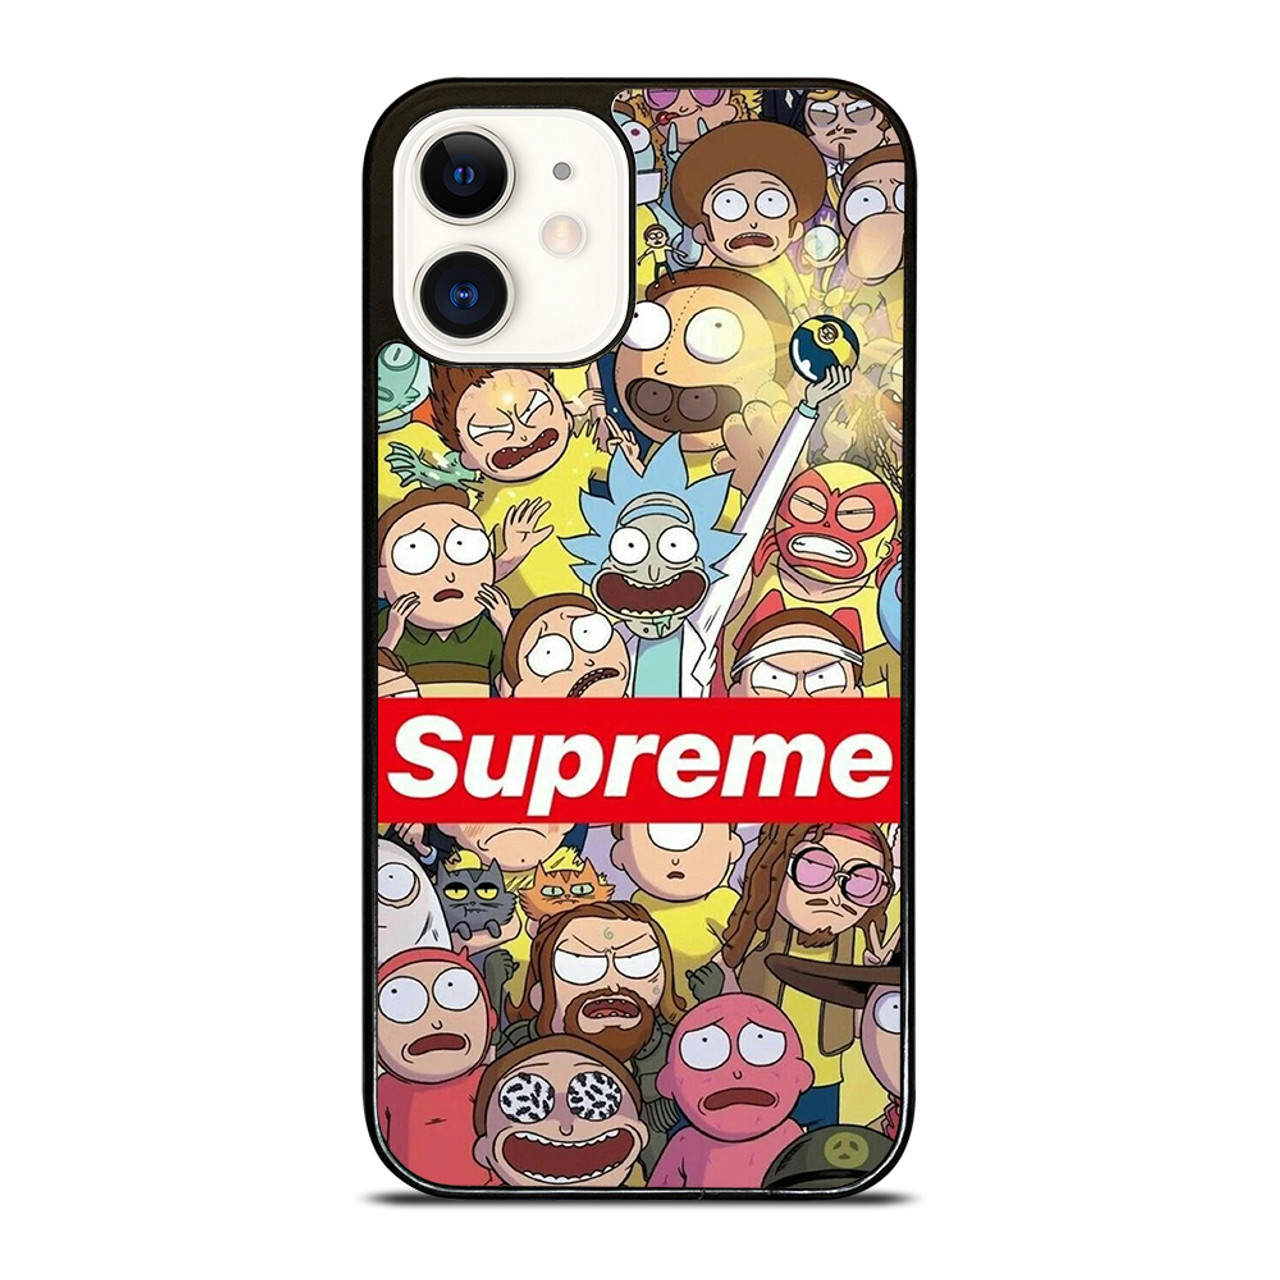 Supreme Usa iPhone XR Case